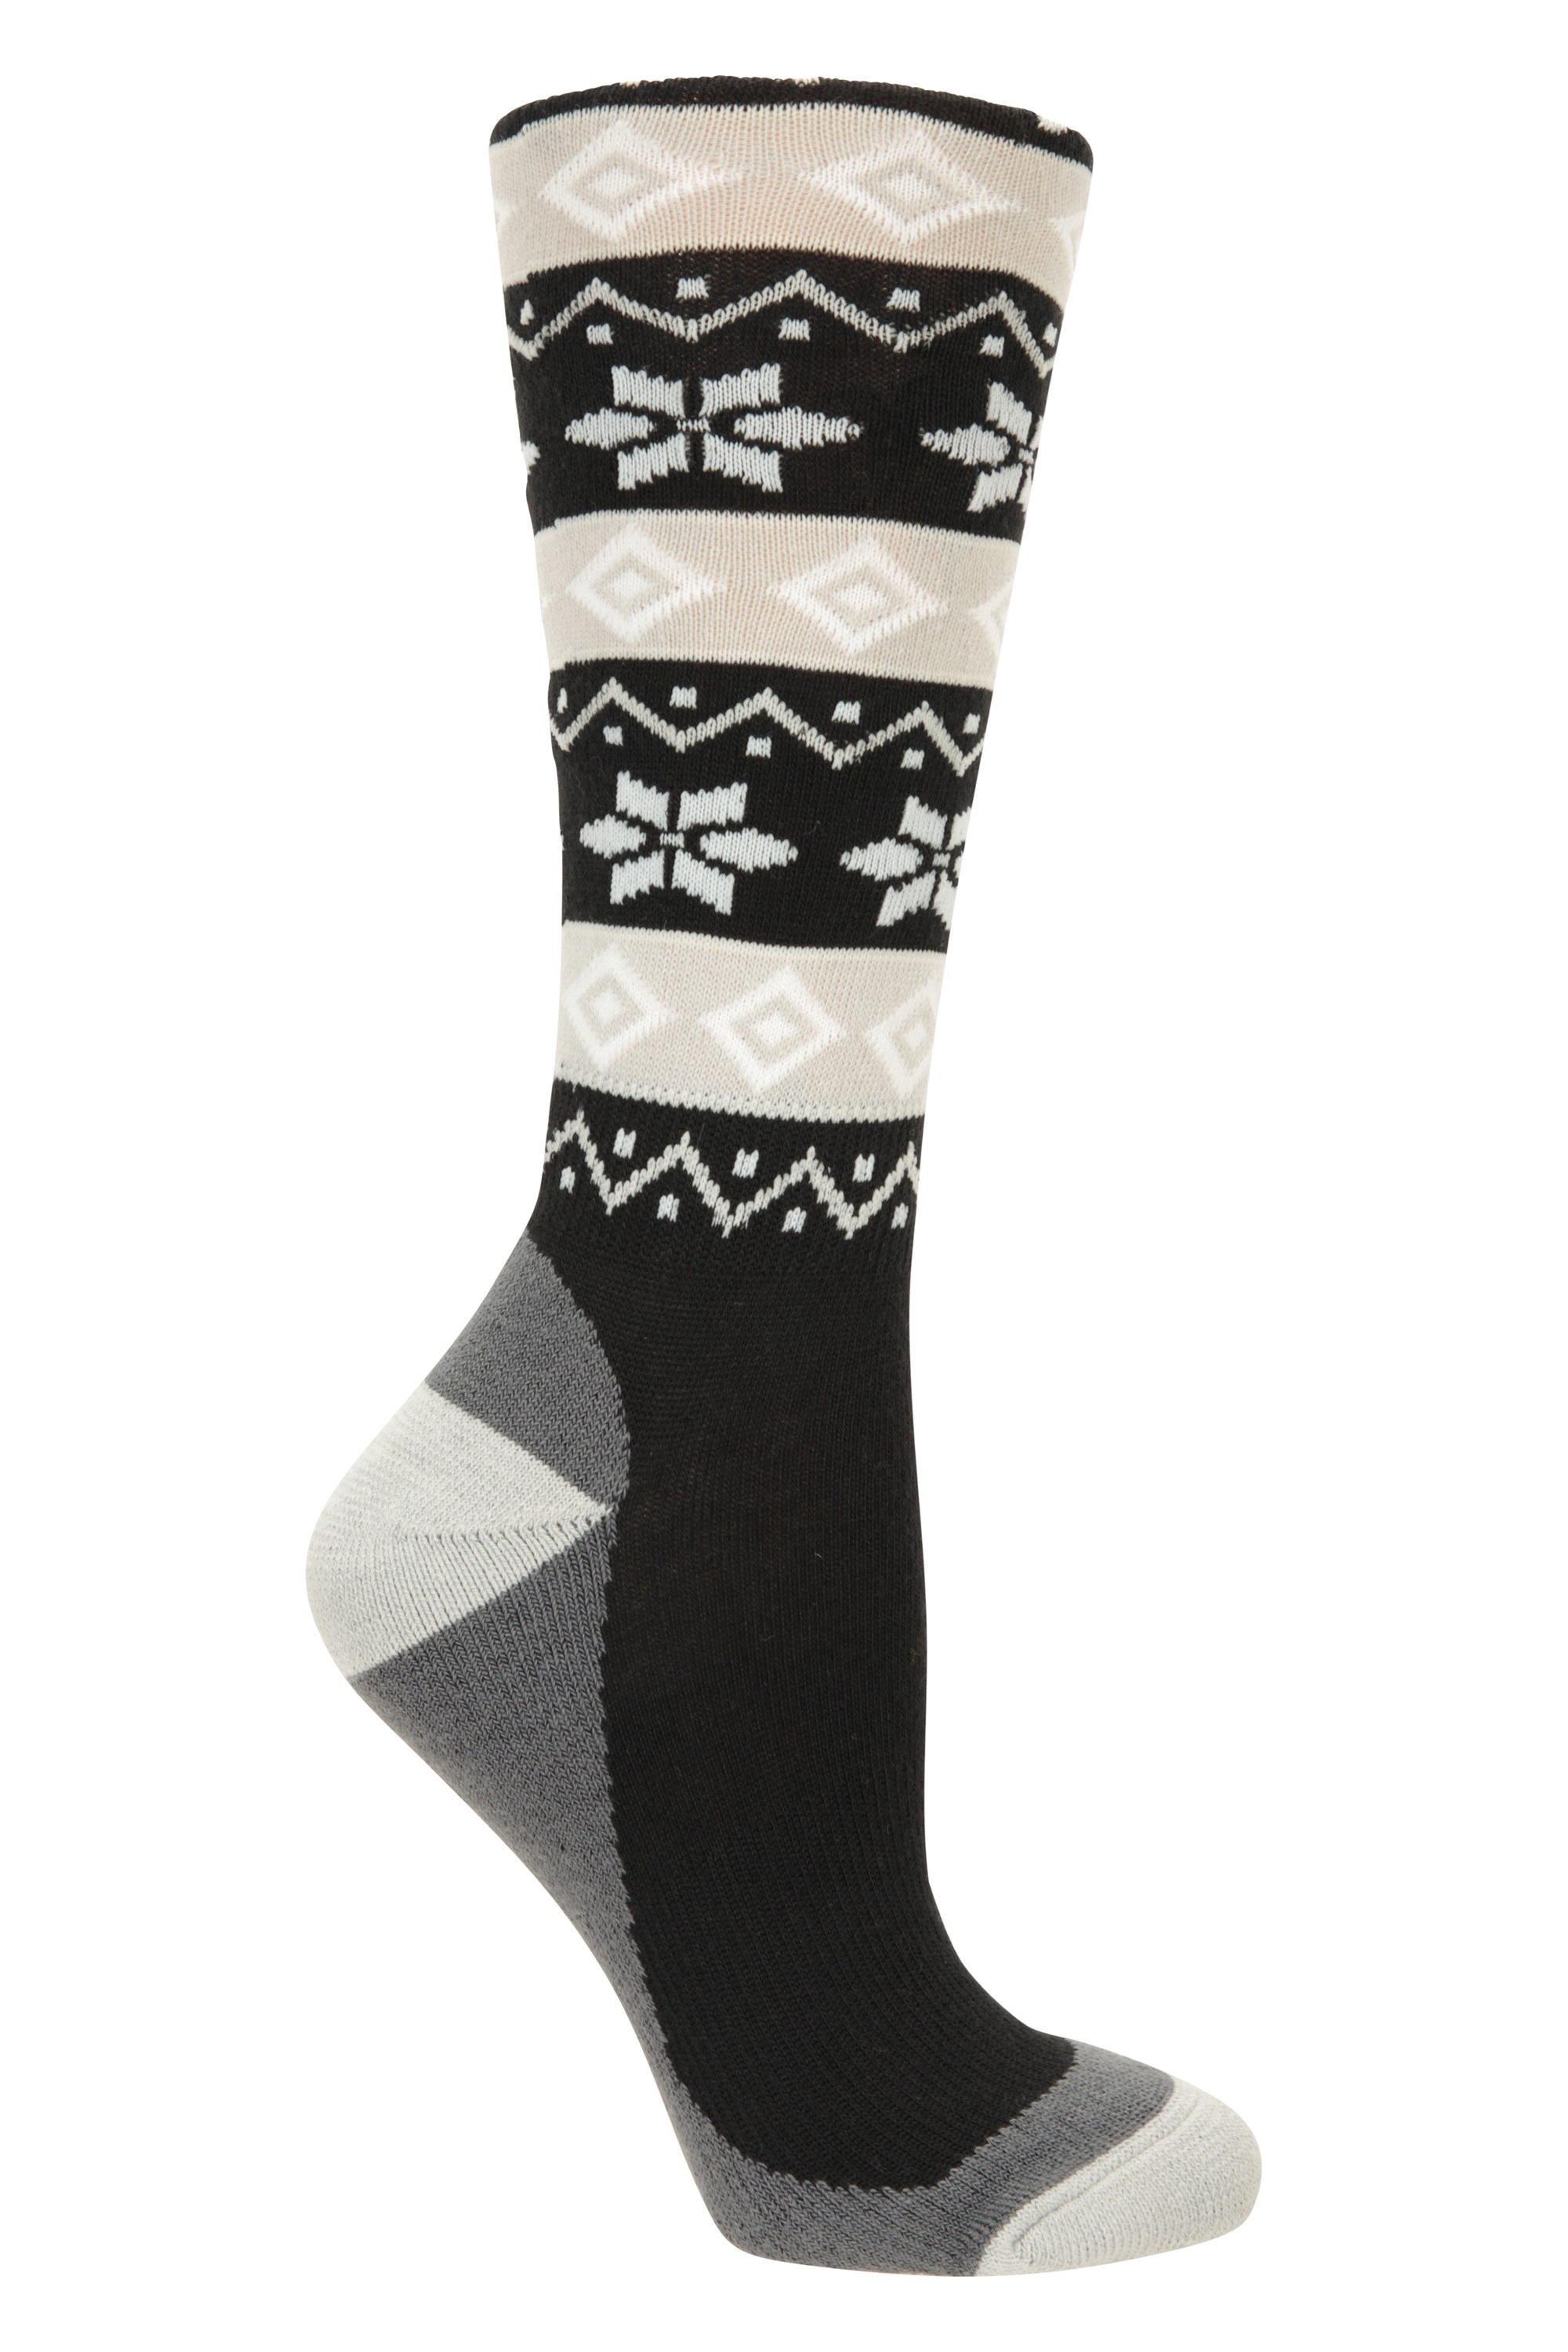 Mountain Warehouse Ski Kids Socks Embroidery Tube Socks Warm Winter Socks